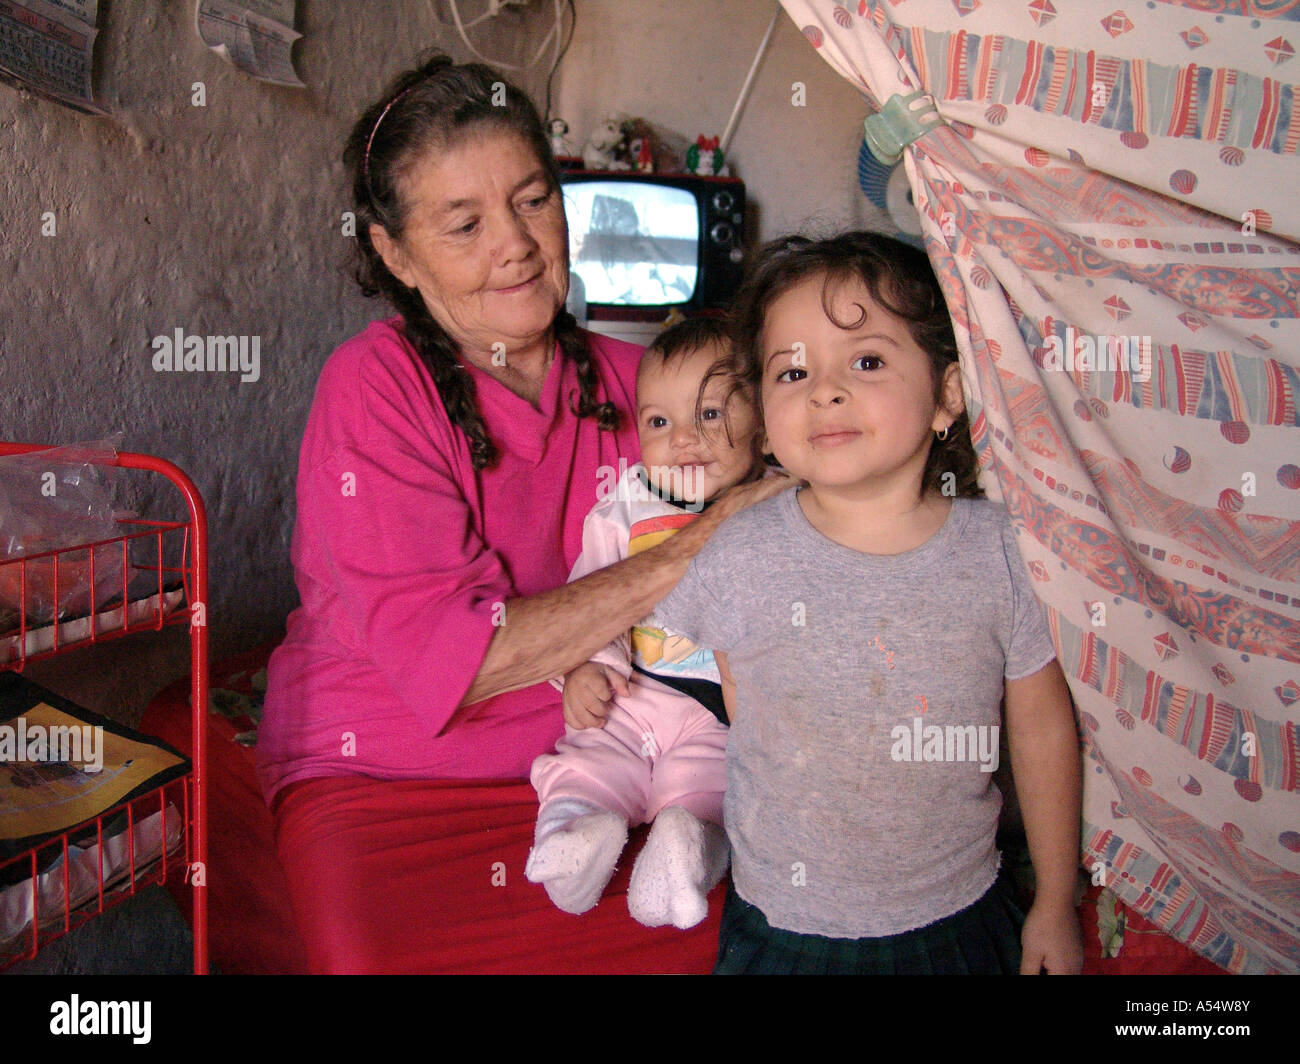 Painet ip1997 honduras woman grandchildren slum tegucigalpa country developing nation less economically developed culture Stock Photo